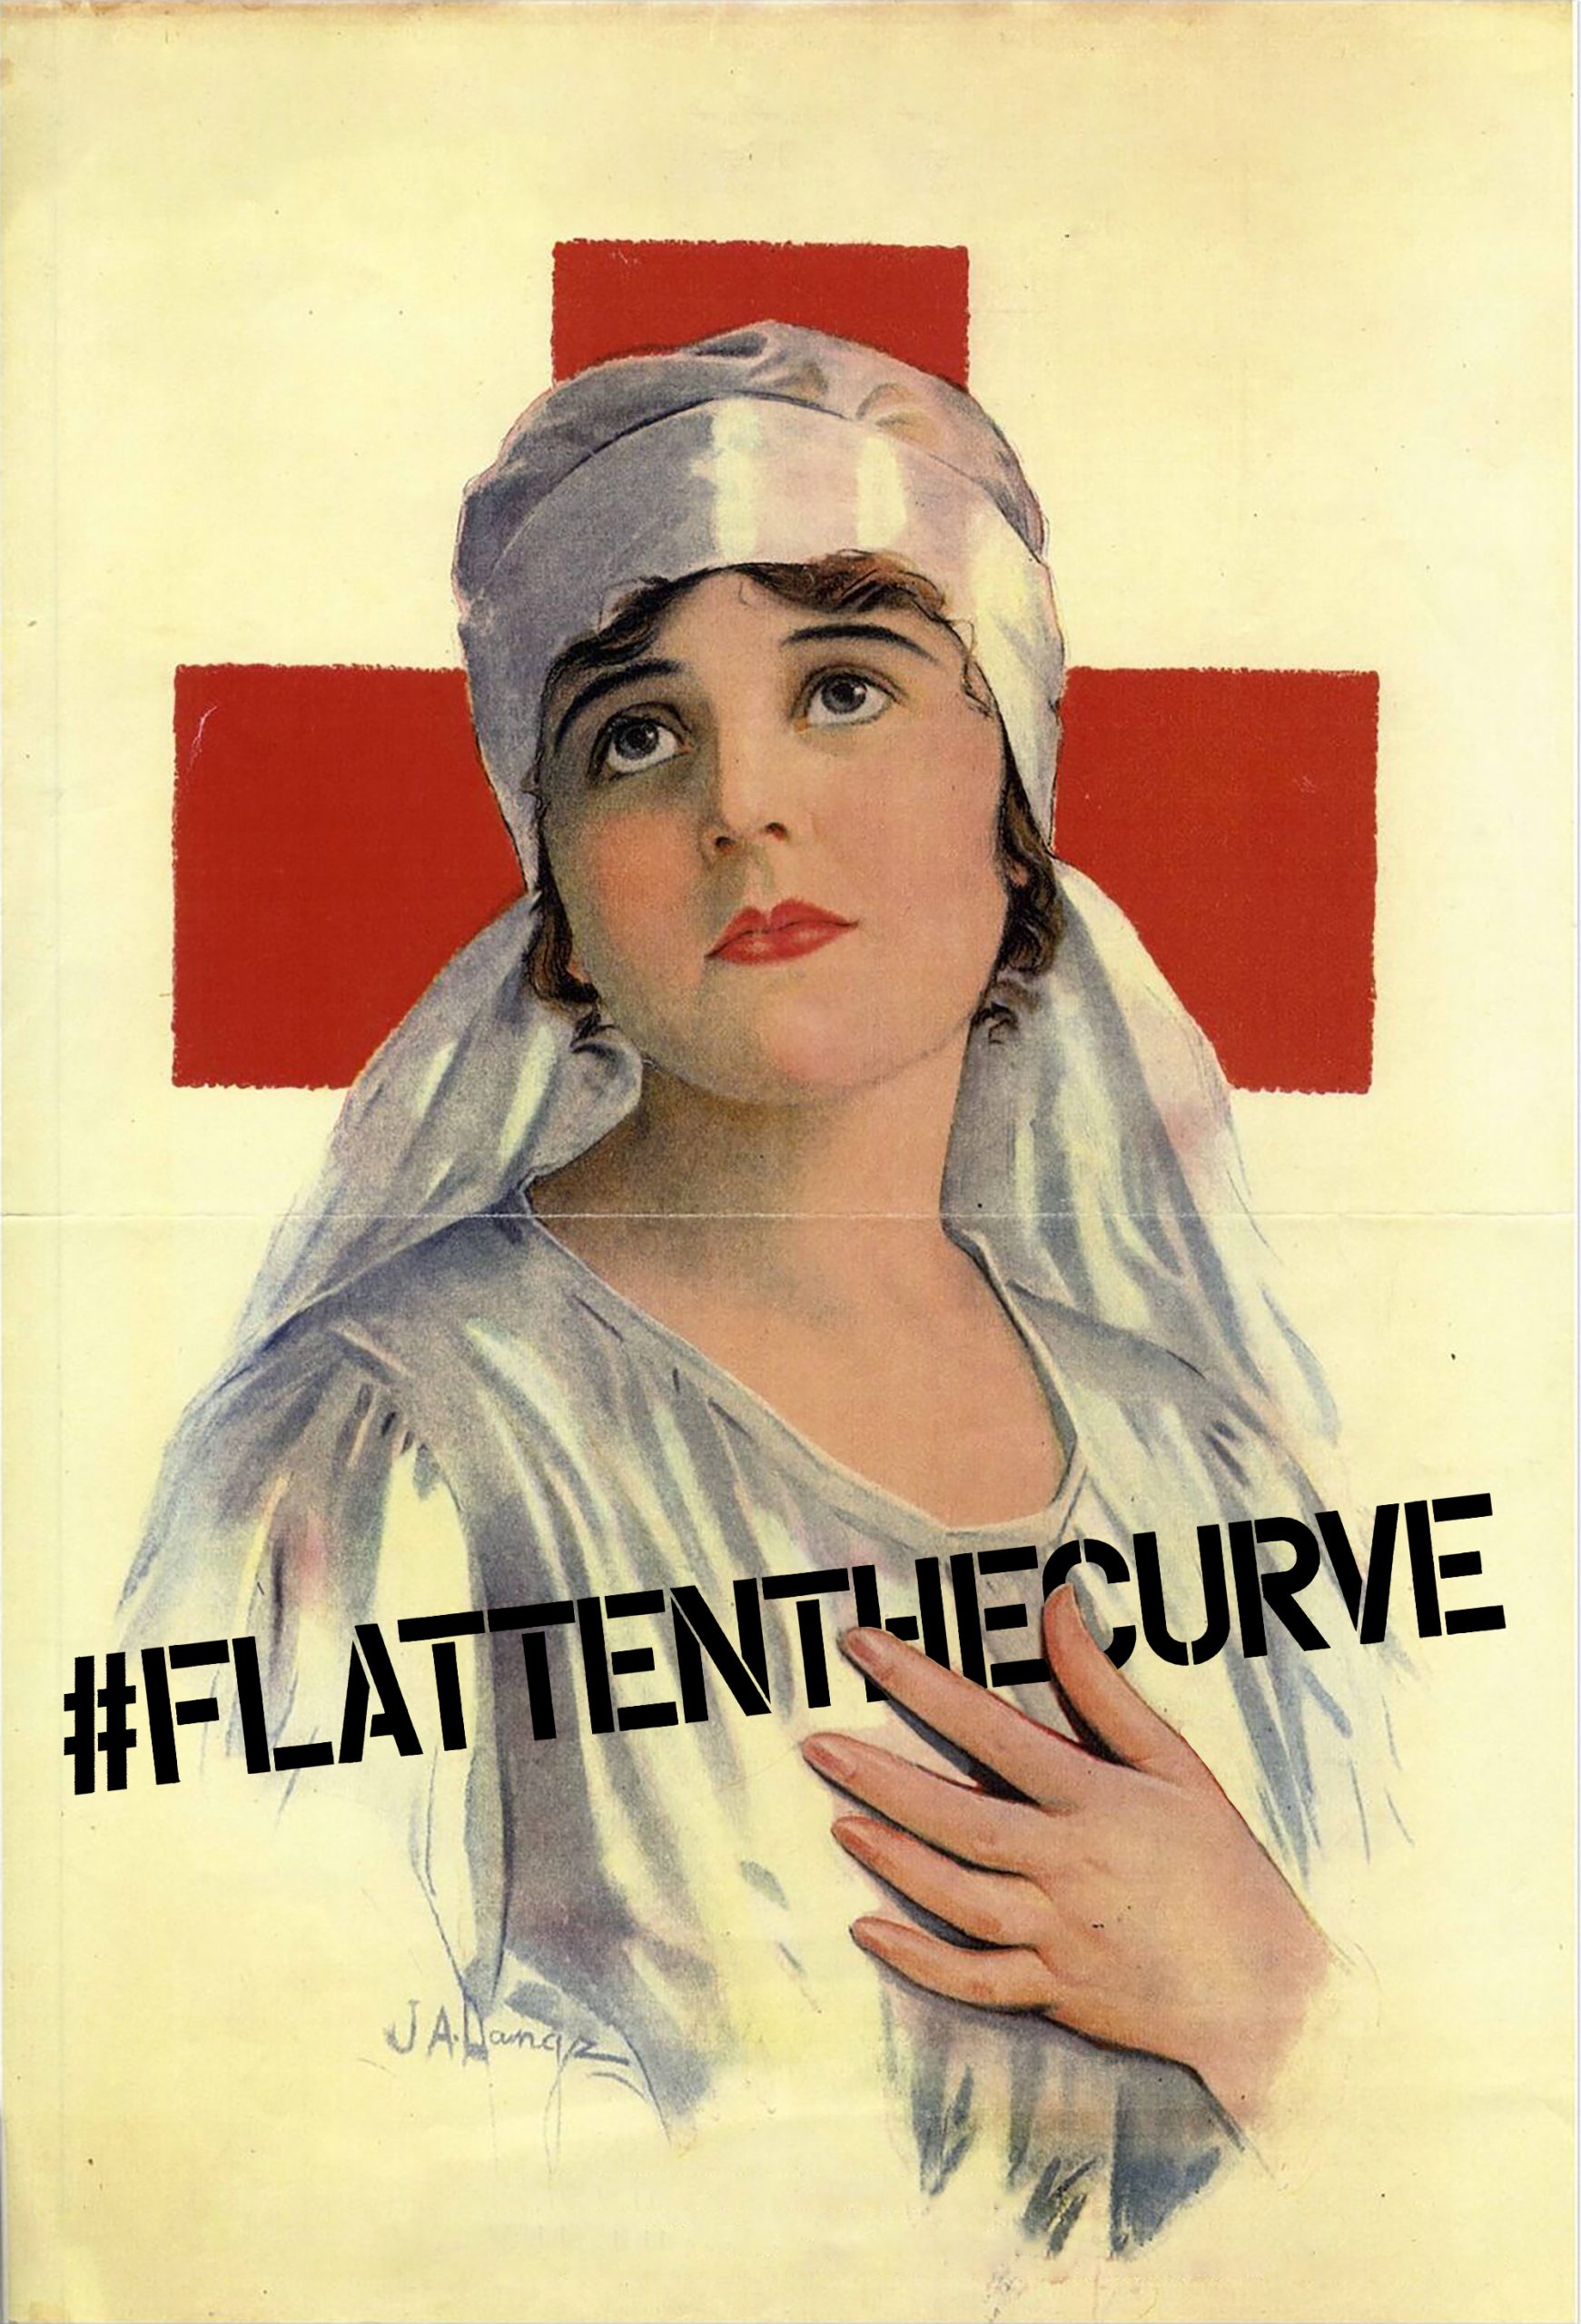 #FLATTENTHECURVE